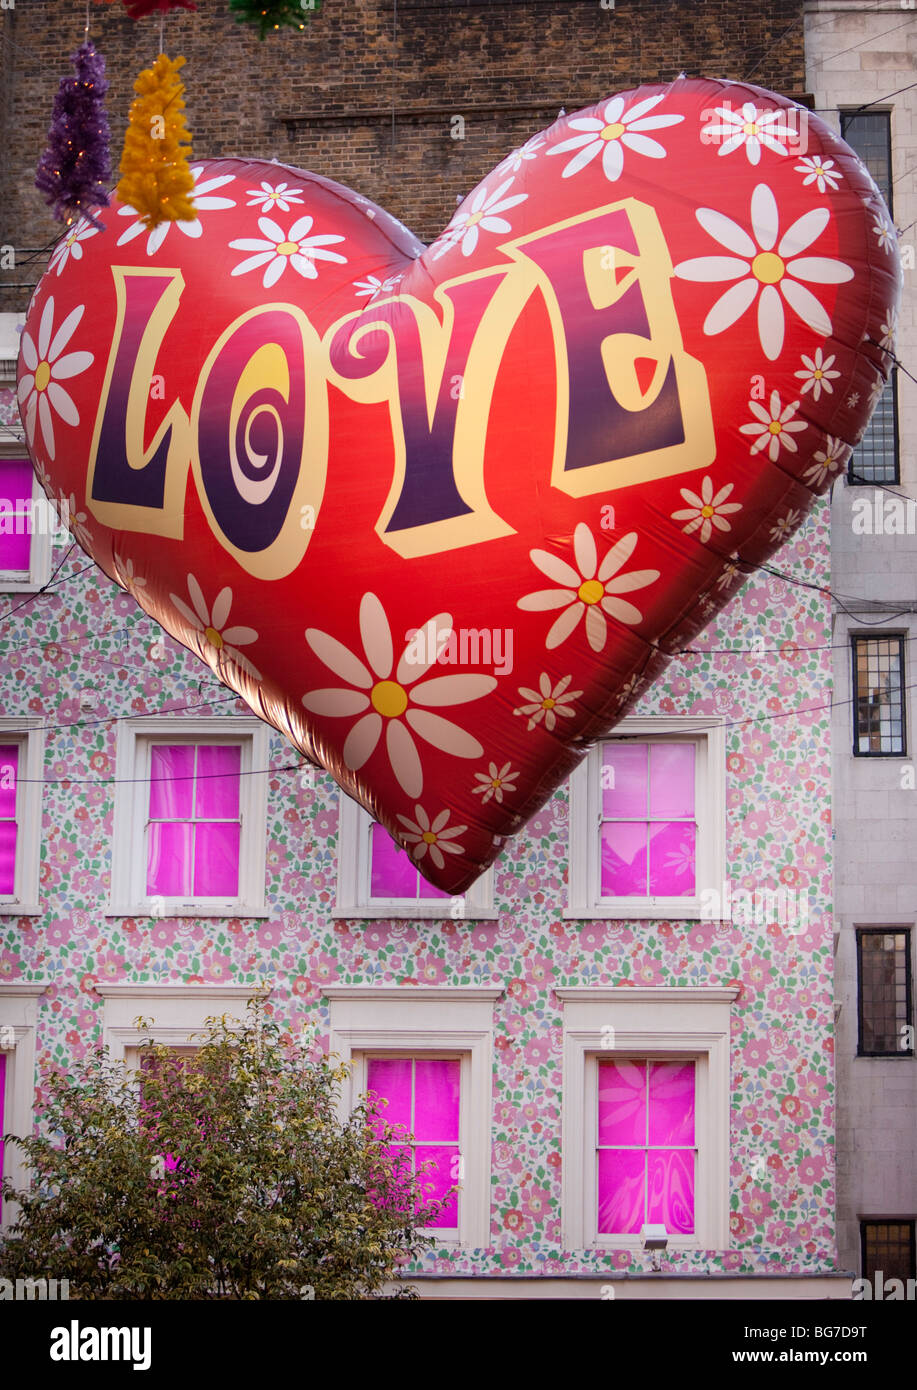 Giant Love balloon, London, England Stock Photo